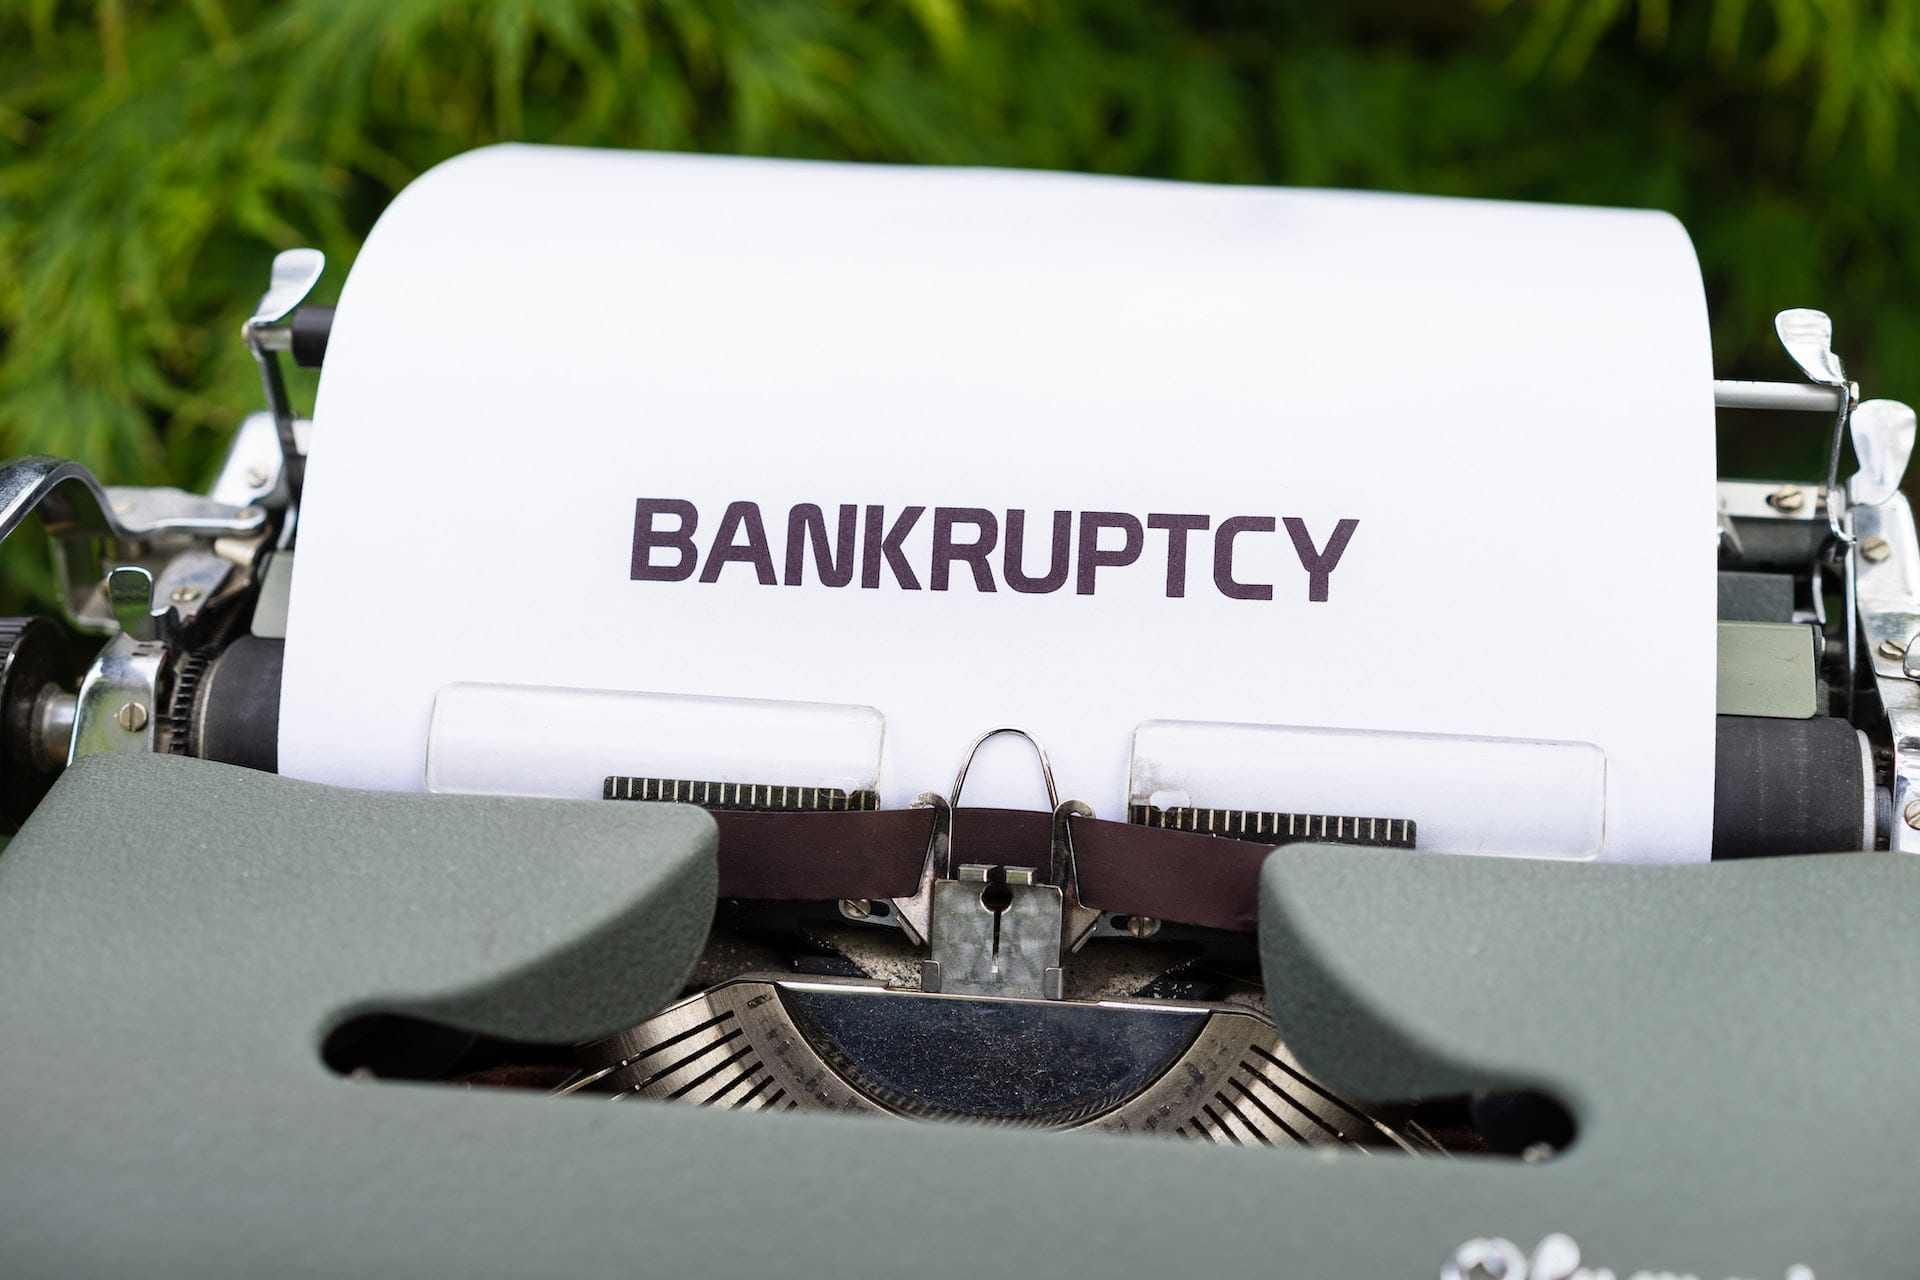 Three types of bankruptcies